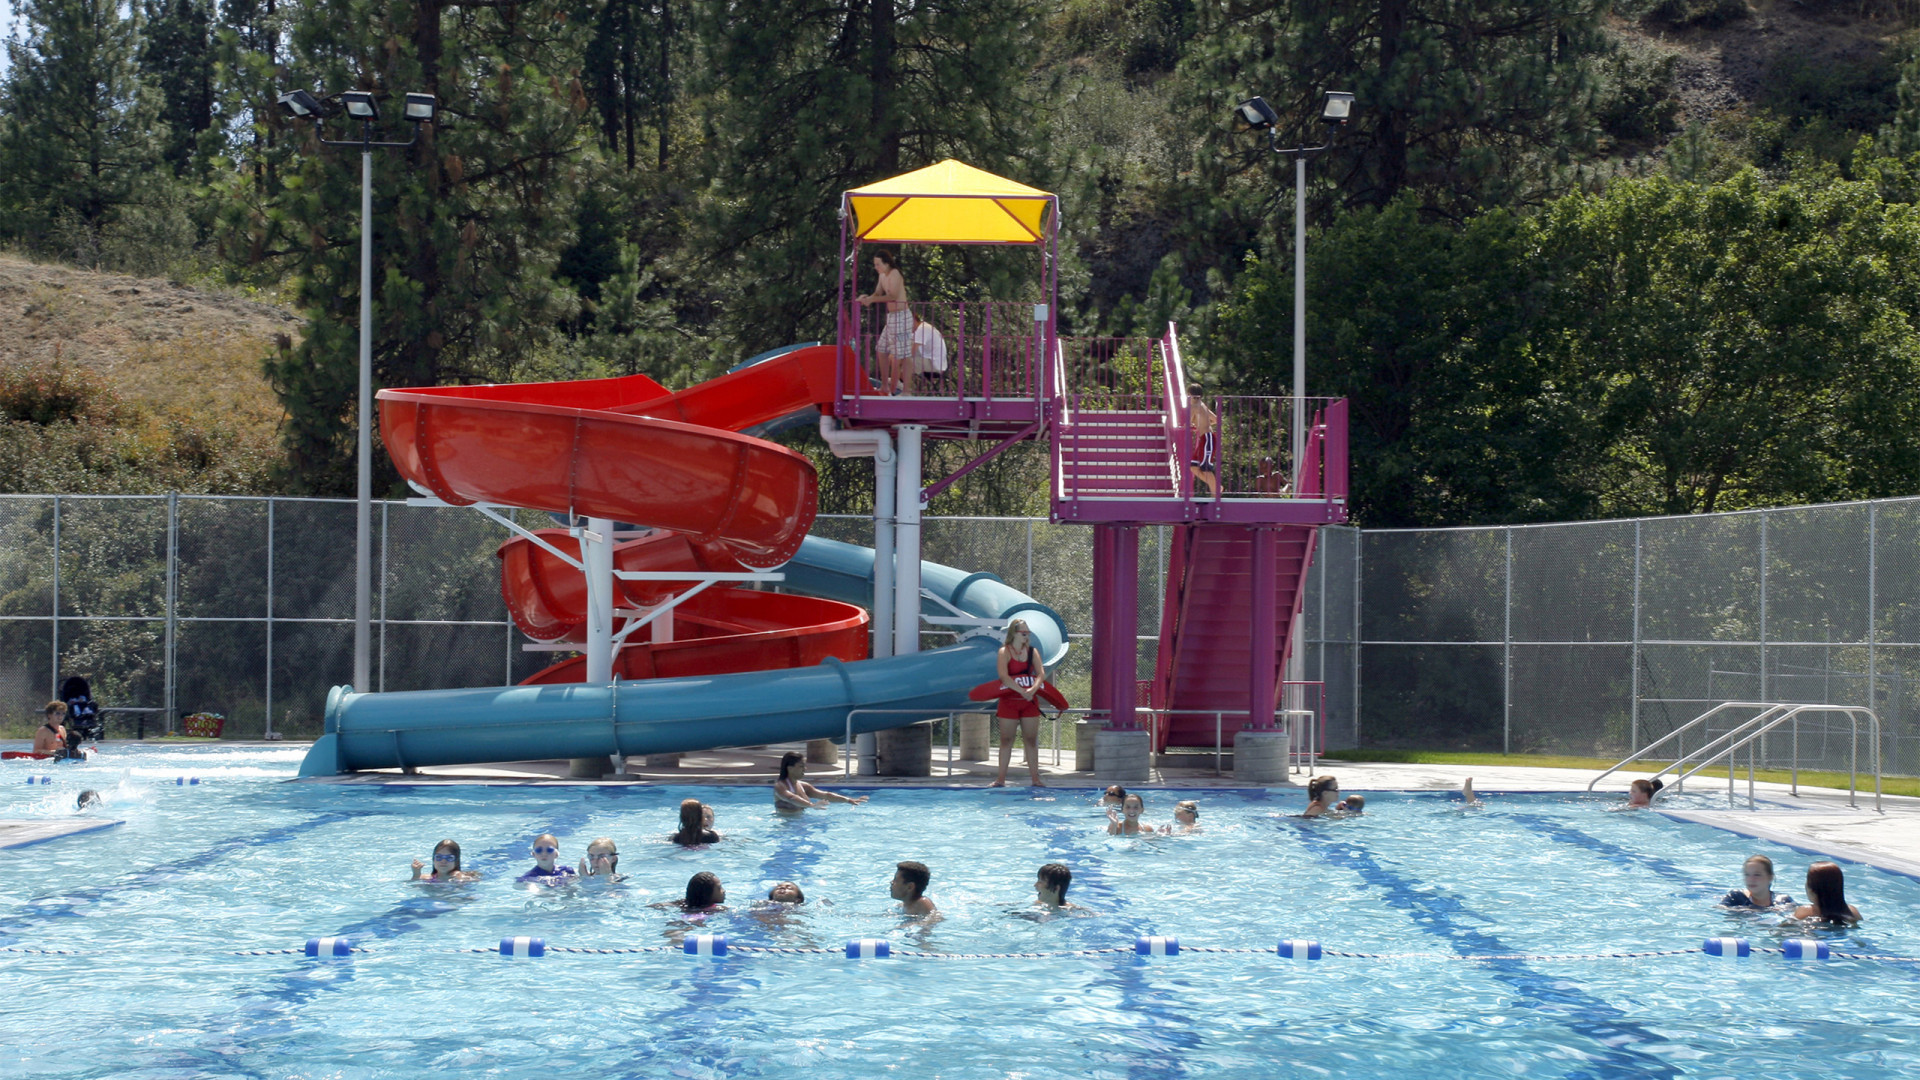 automatic pool covers spokane wa